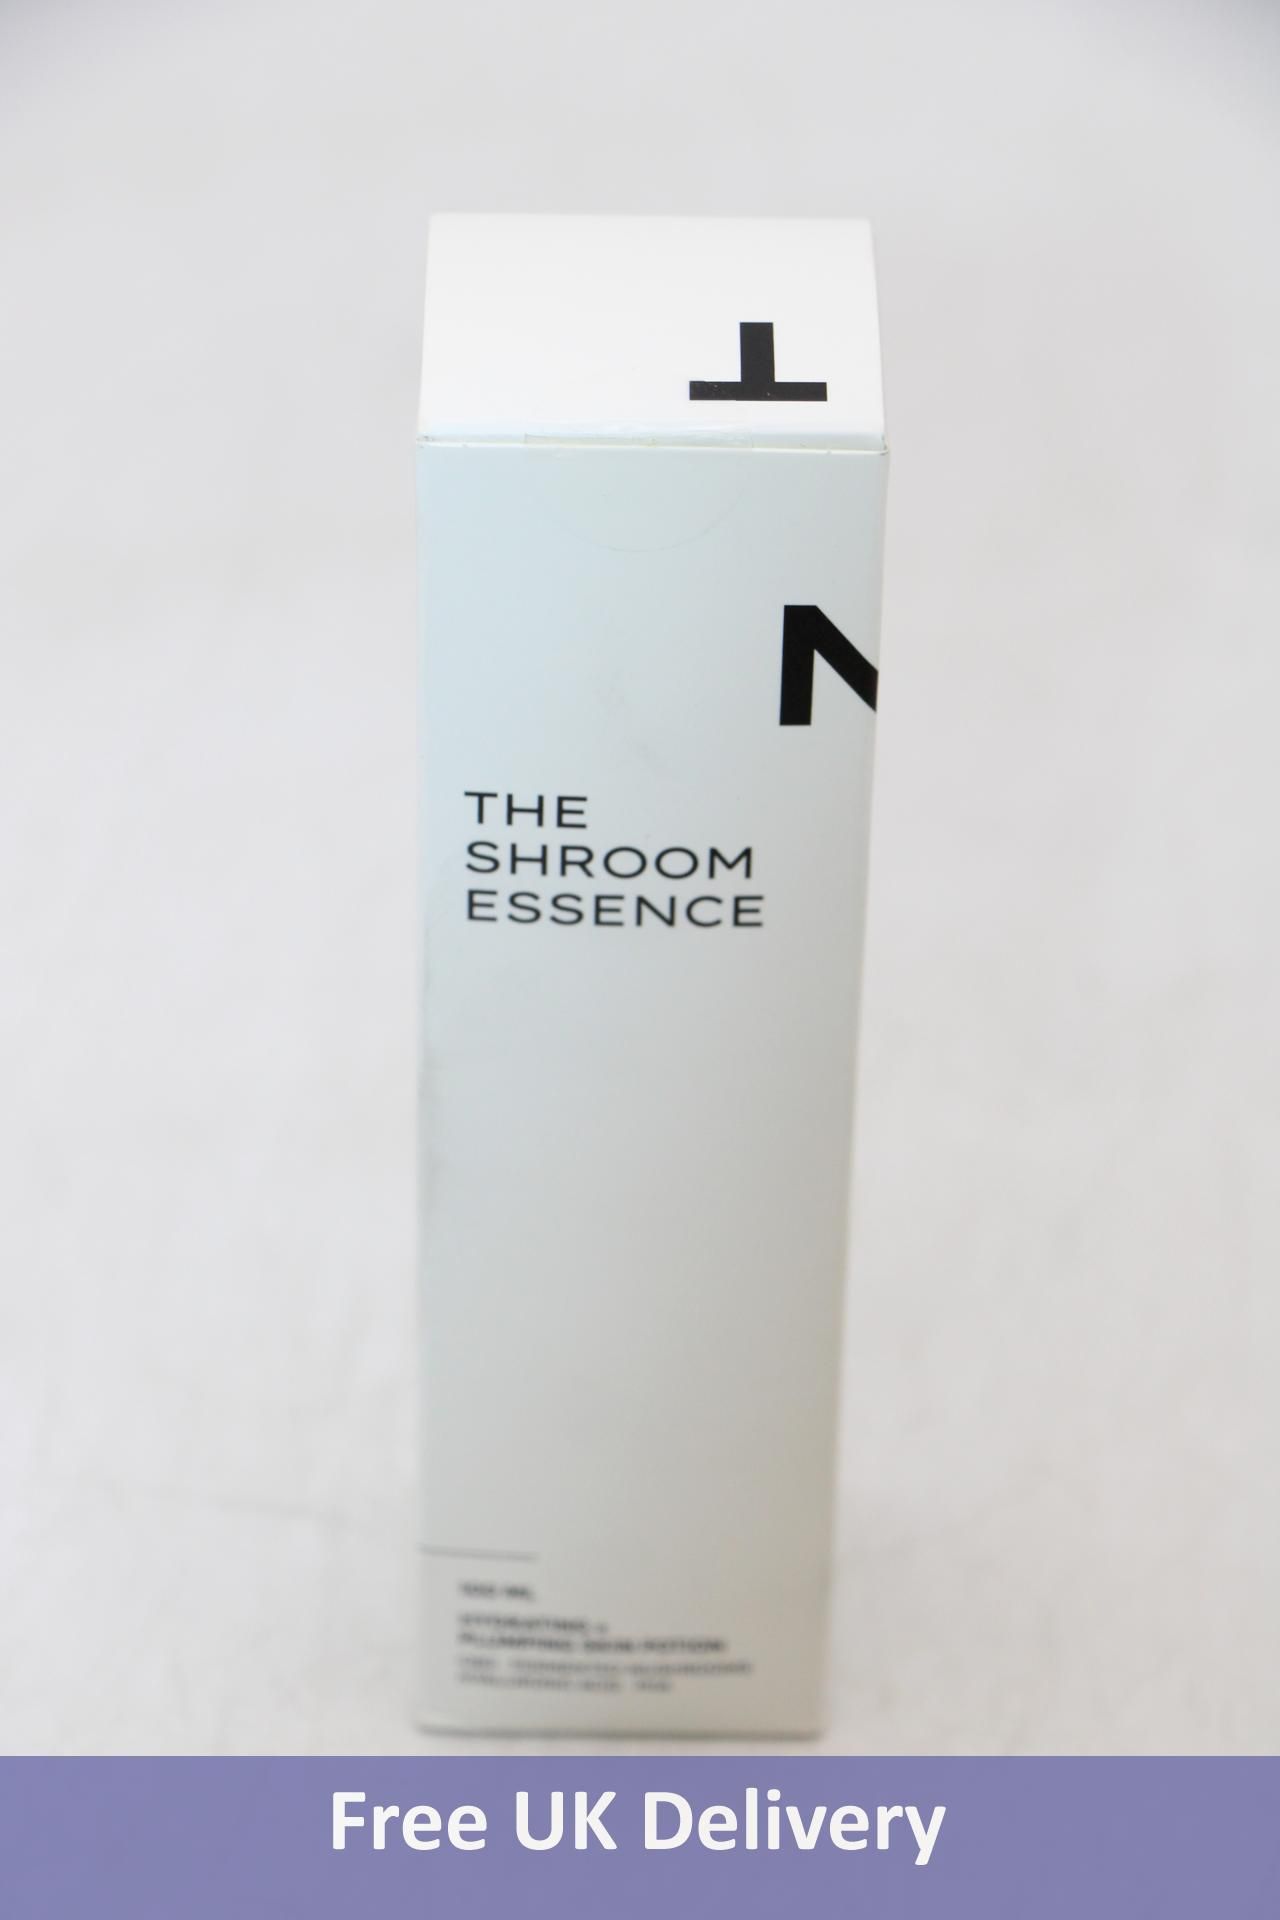 Ten Mantle The Shroom Essence Bottle Hydrating x Plumping Skin Potion Cbd, Size 100ml - Image 10 of 10